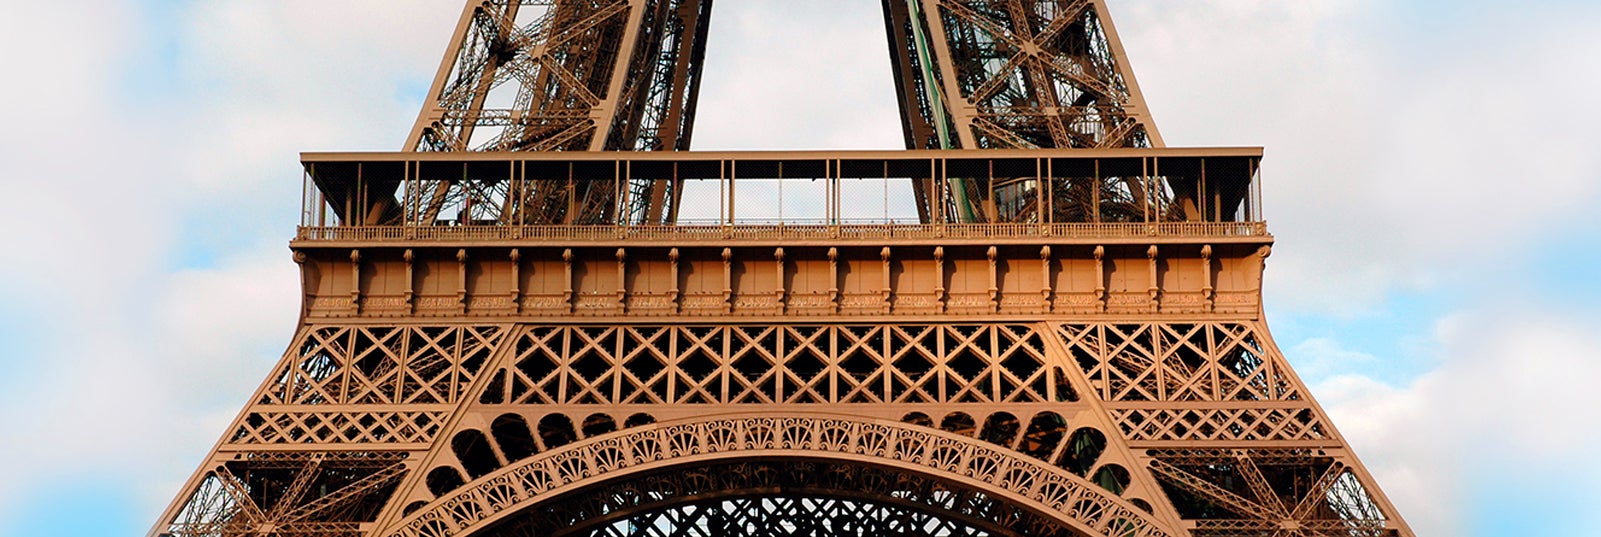 Eiffel Tower Paris France Black Silhouette Stock Vector (Royalty Free)  1530554894 | Shutterstock